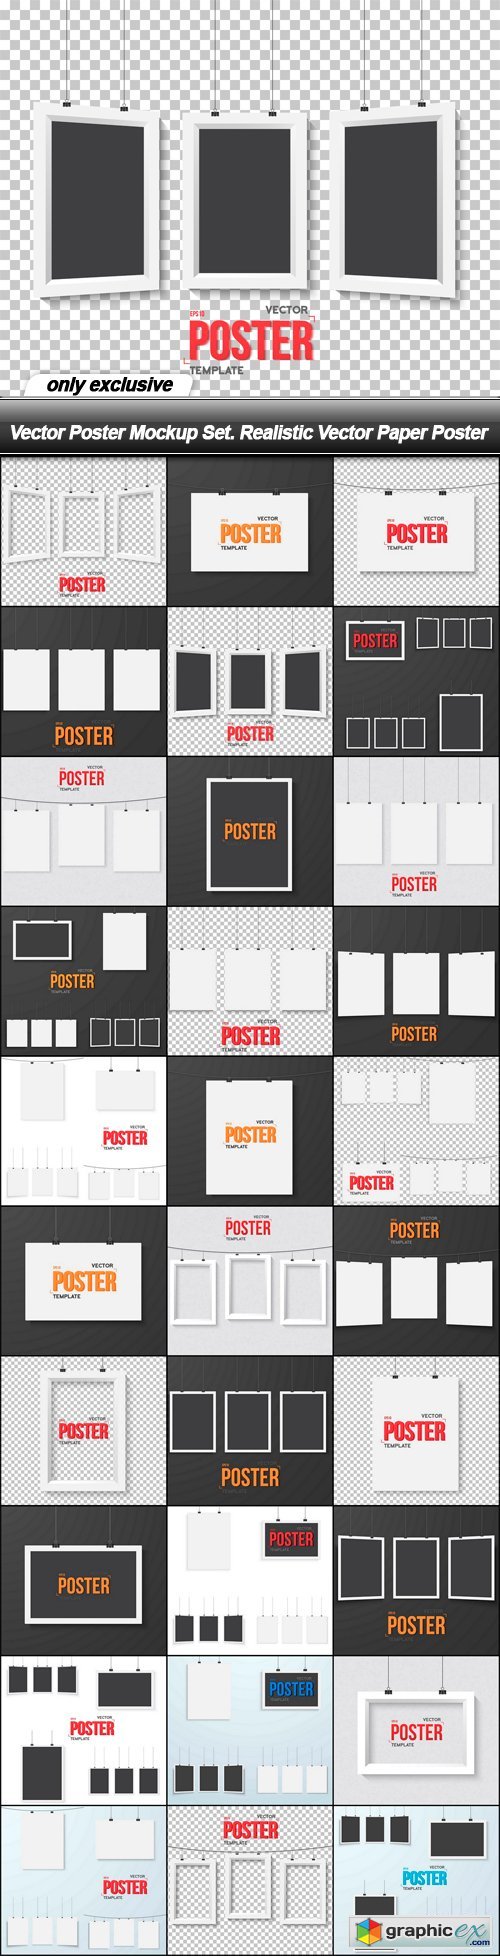 Poster Mockup Set. Realistic Vector Paper Poster - 30 EPS